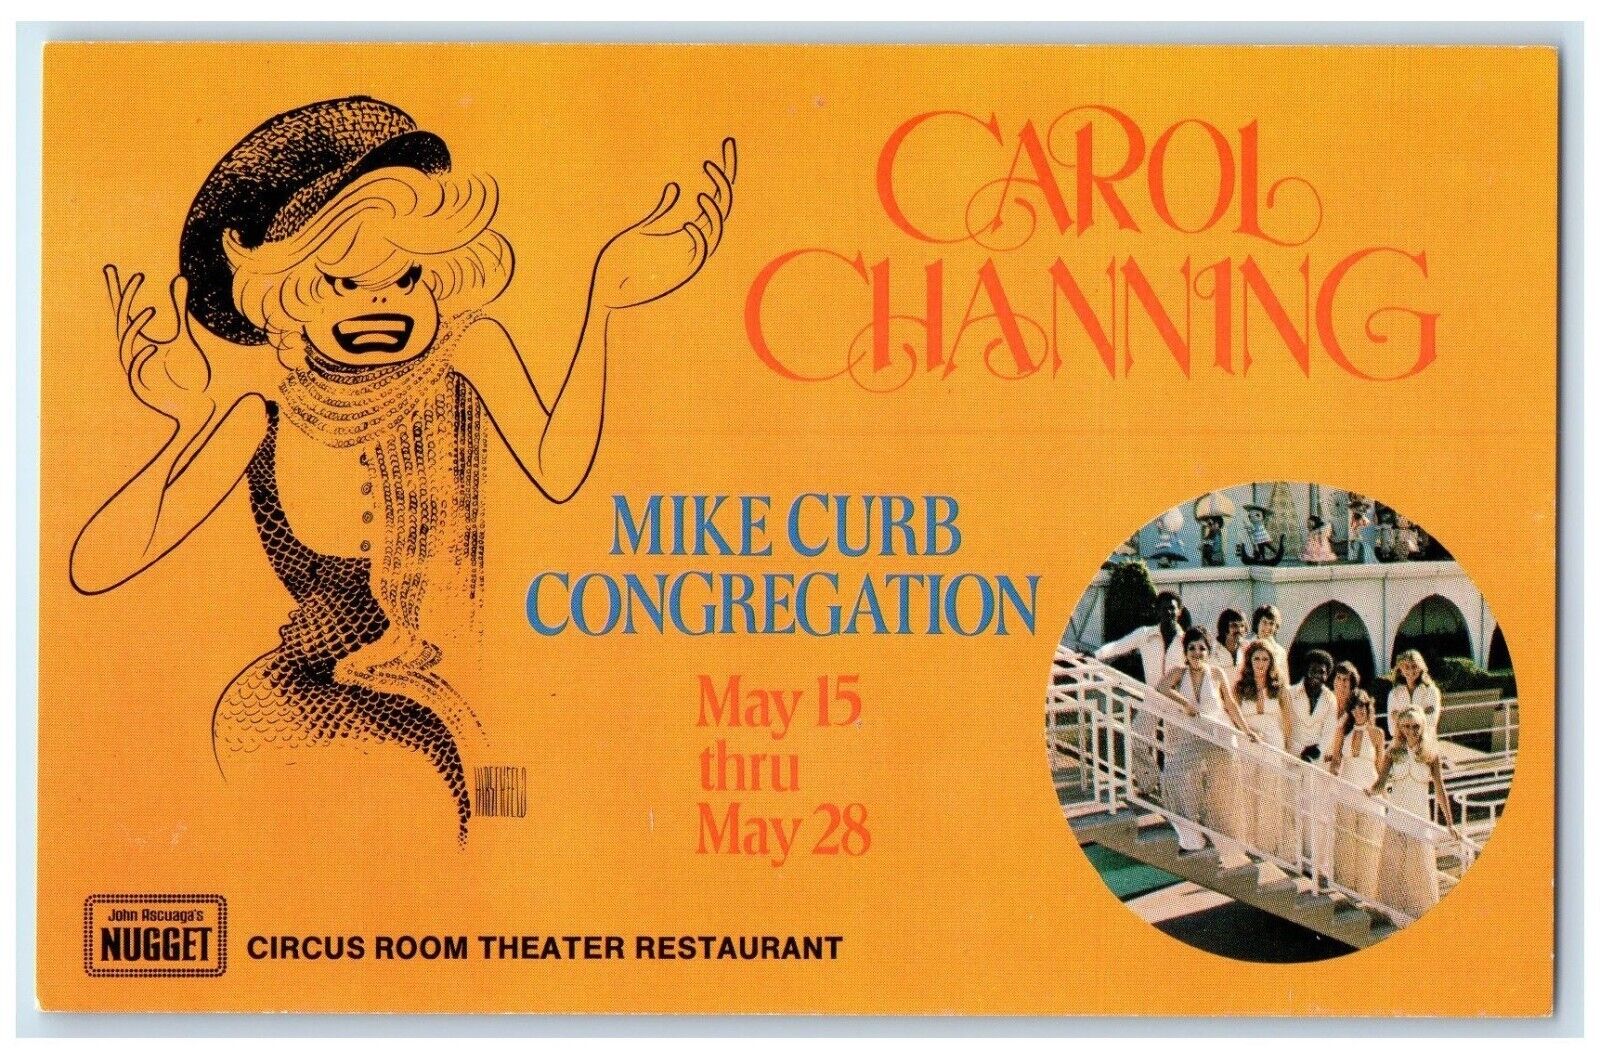 1960 John Ascuaga Nugget Carrol Channing Theatre Restaurant Advertising Postcard